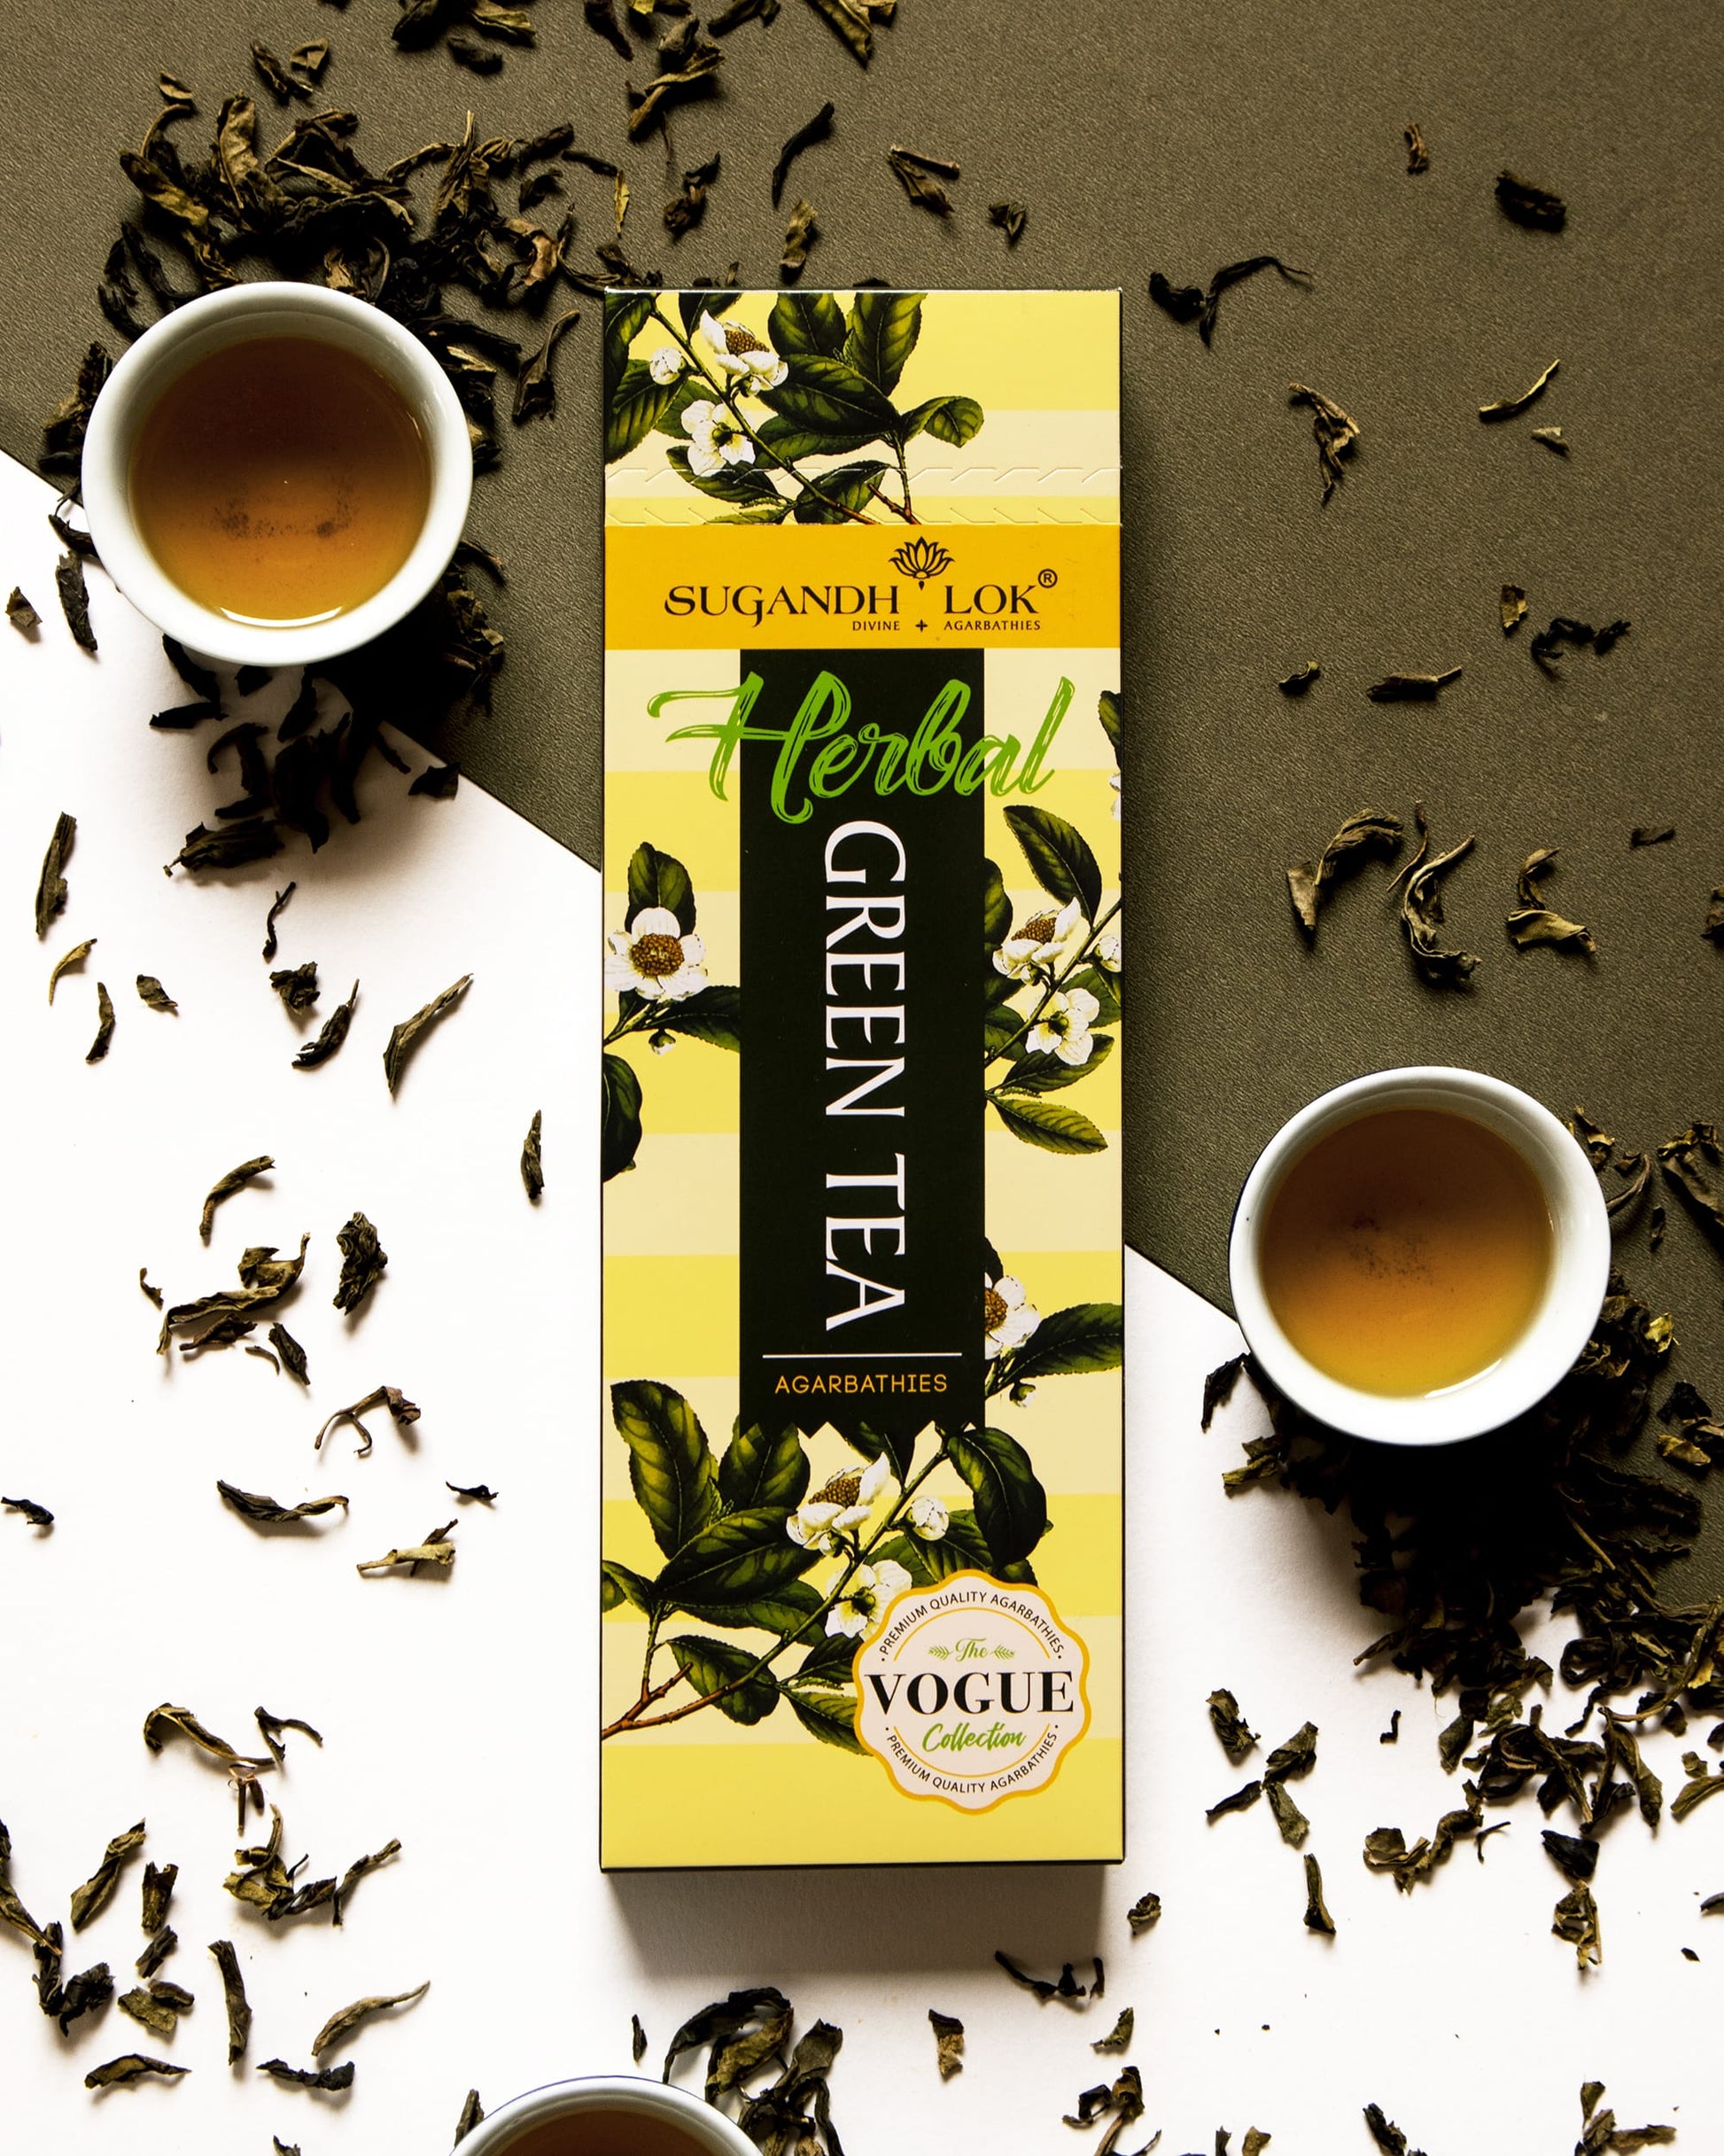 Herbal Green Tea Agarbatti Box surrounded by herbs & herbal tea in cups